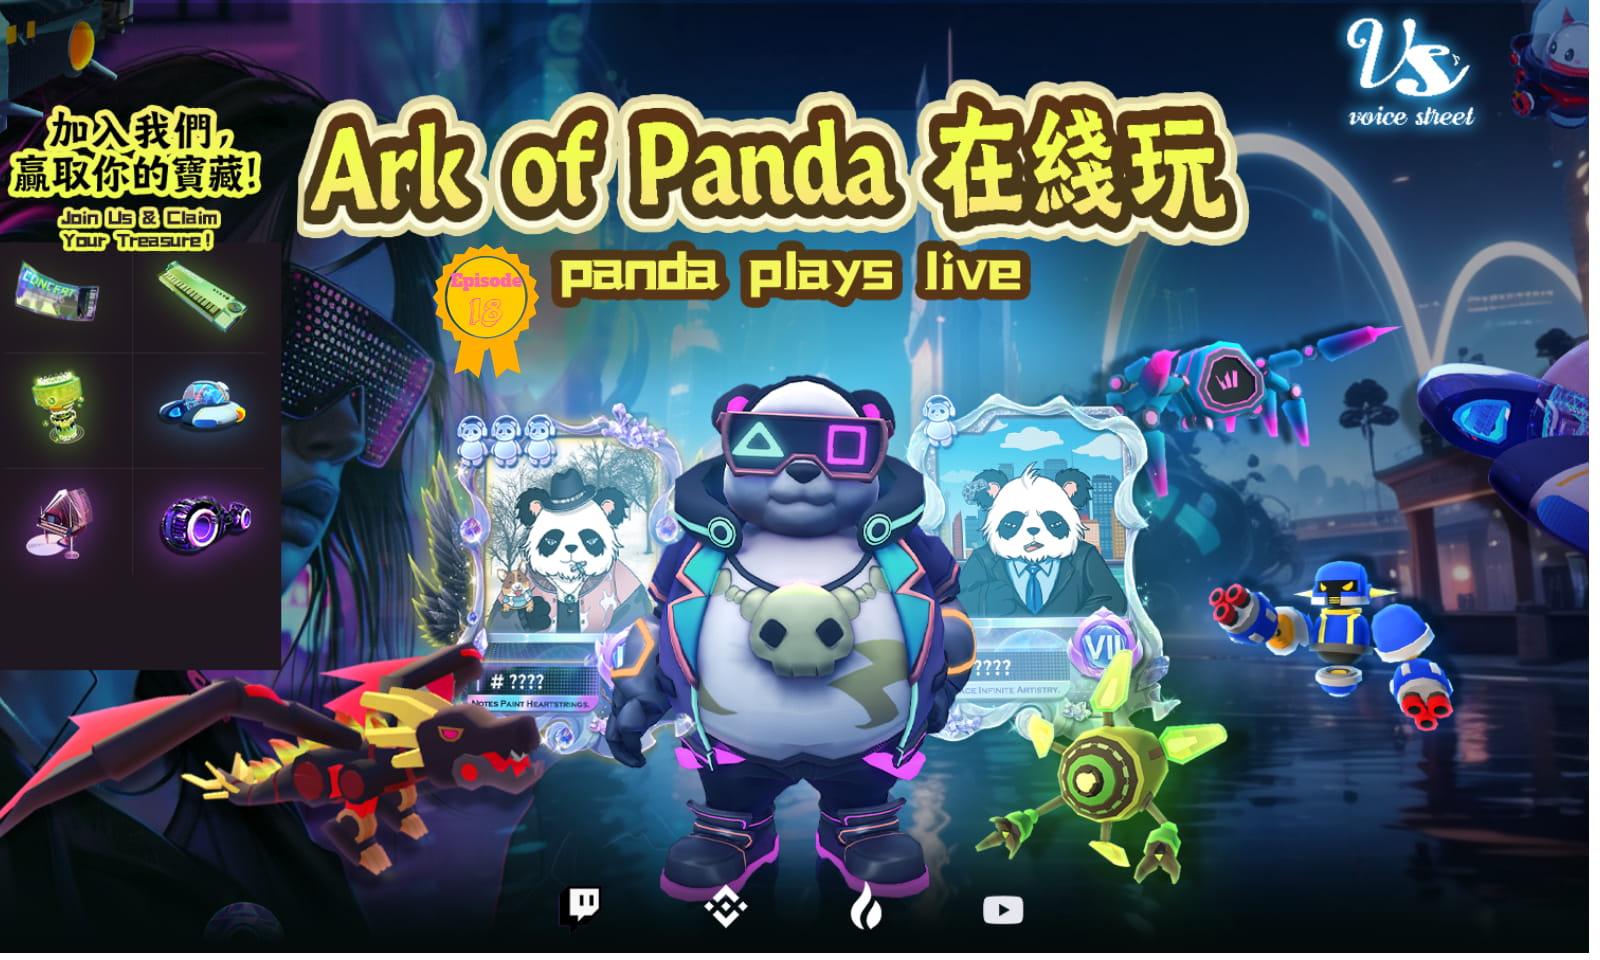 Ark of panda（DPGU）游戏在线玩第18期